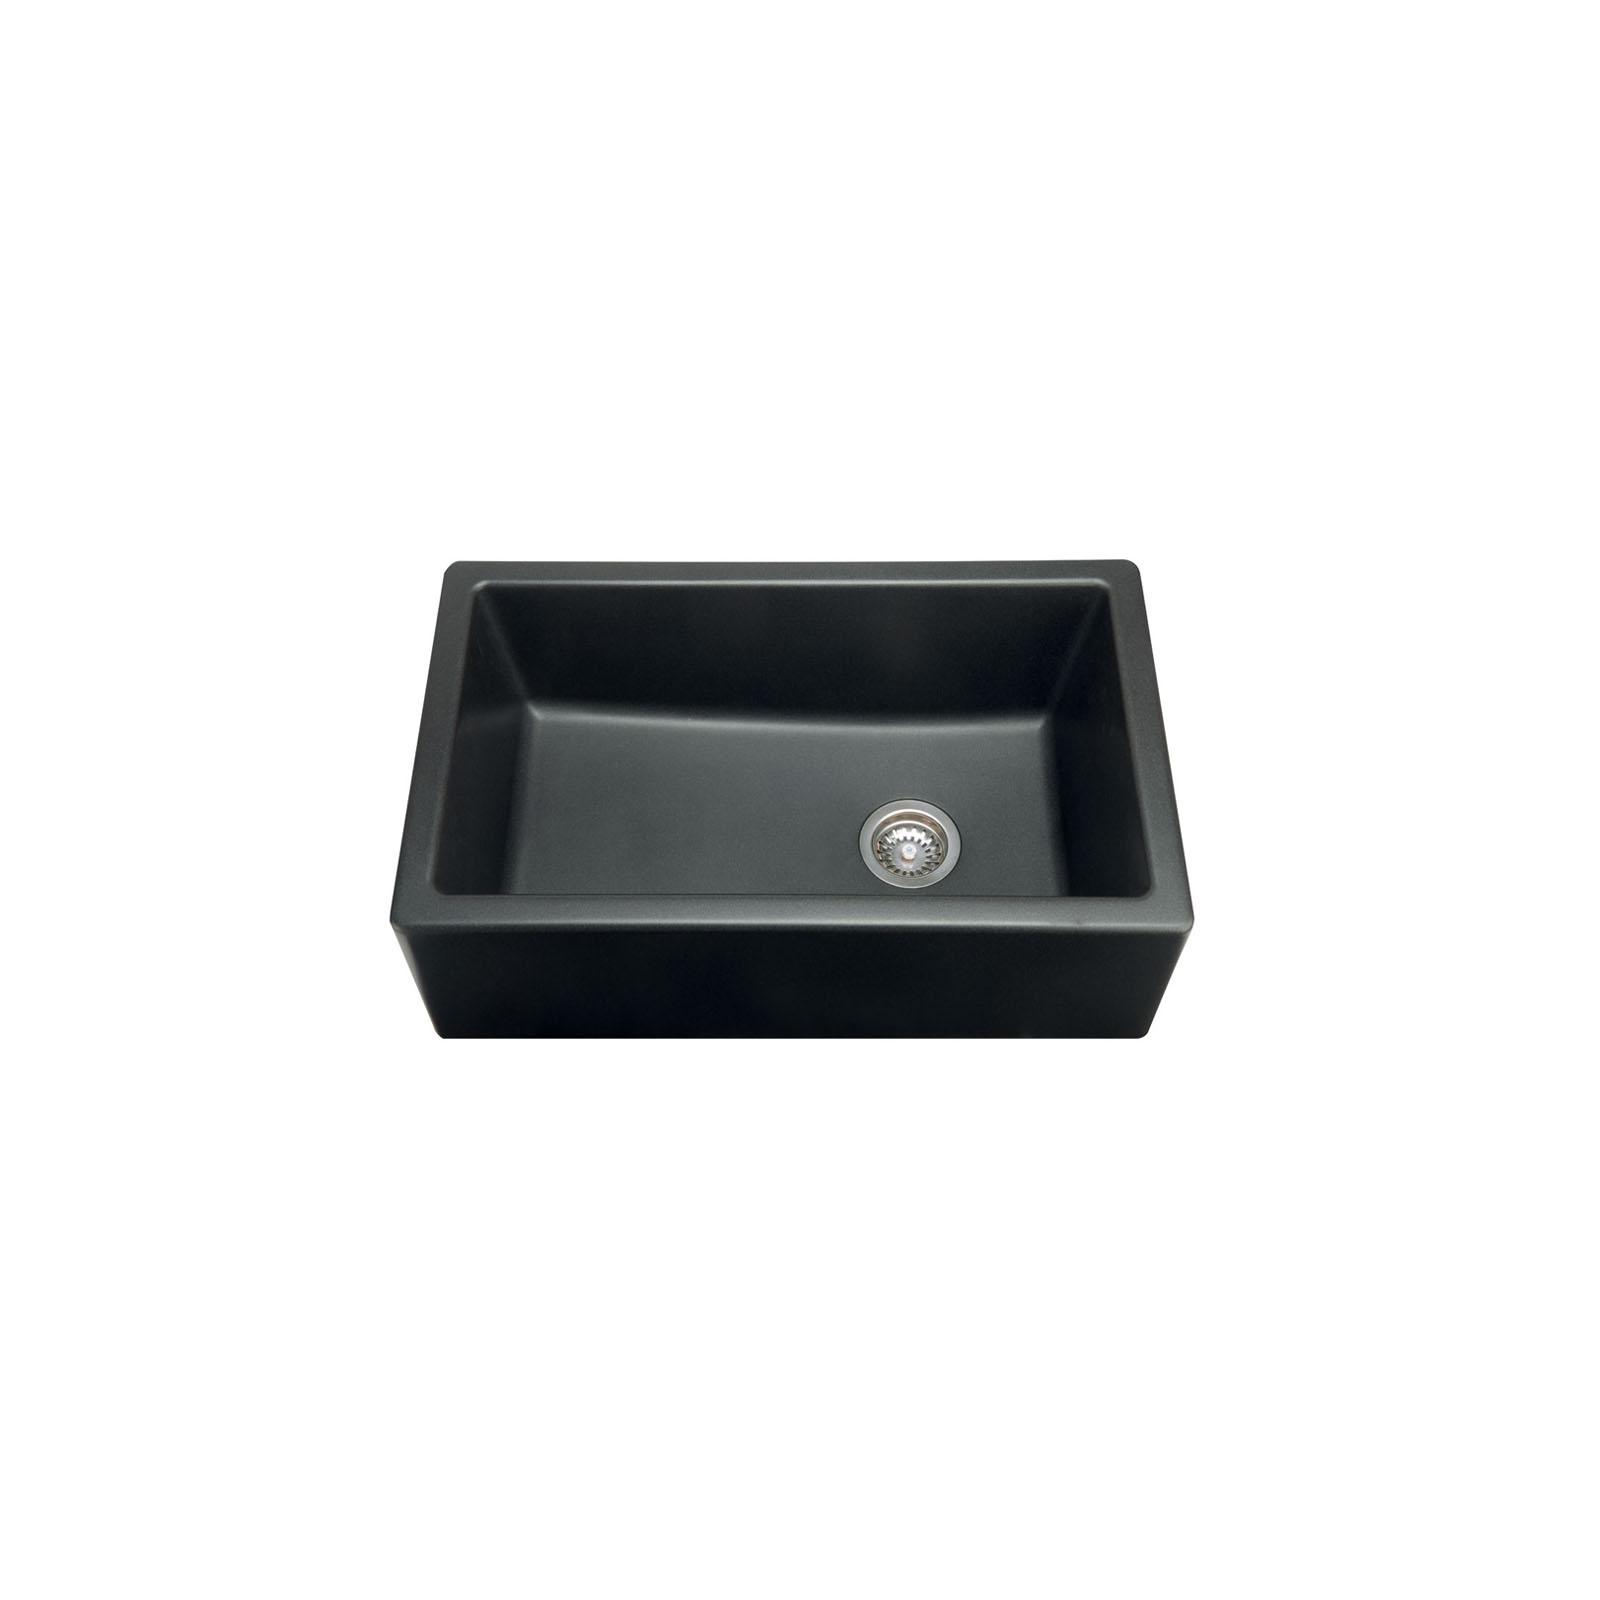 High-quality sink Philippe II granit black - one bowl